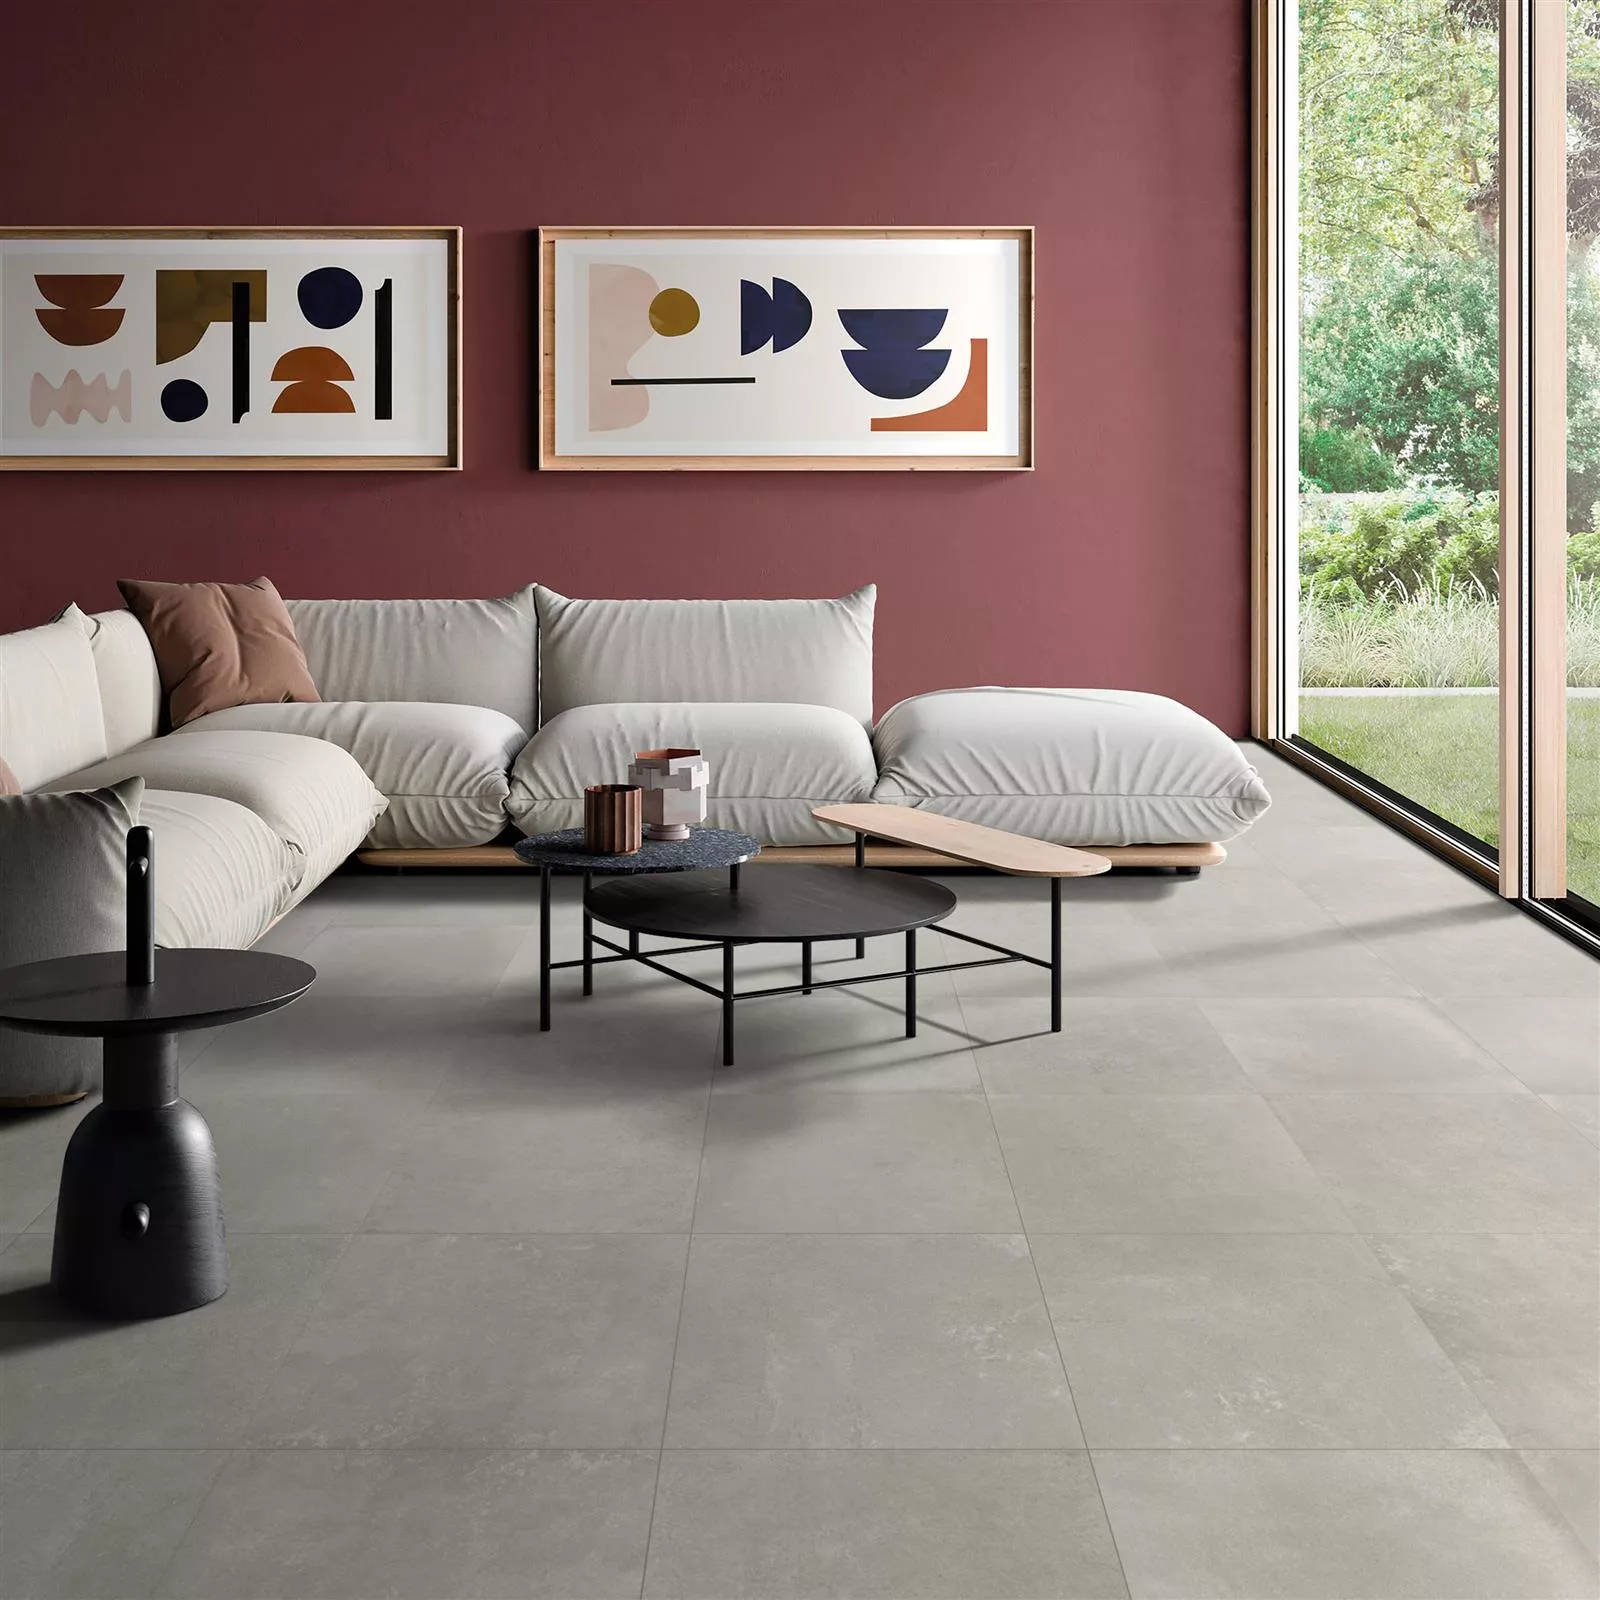 Floor Tiles Cement Optic Nepal Slim Grey 60x60cm